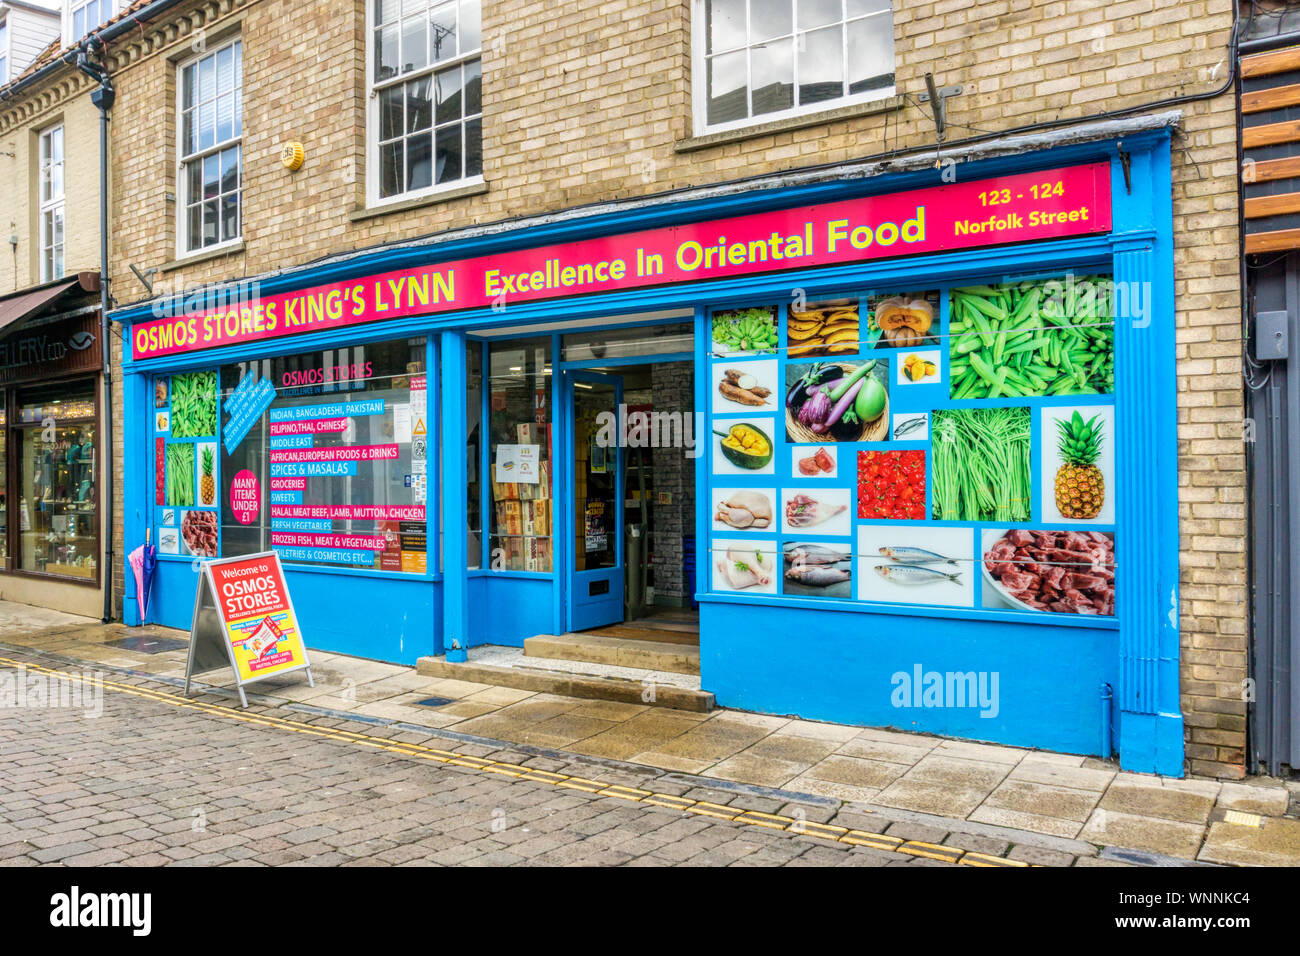 Osmos negozi orientali supermercato alimentare in King's Lynn, Norfolk. Foto Stock